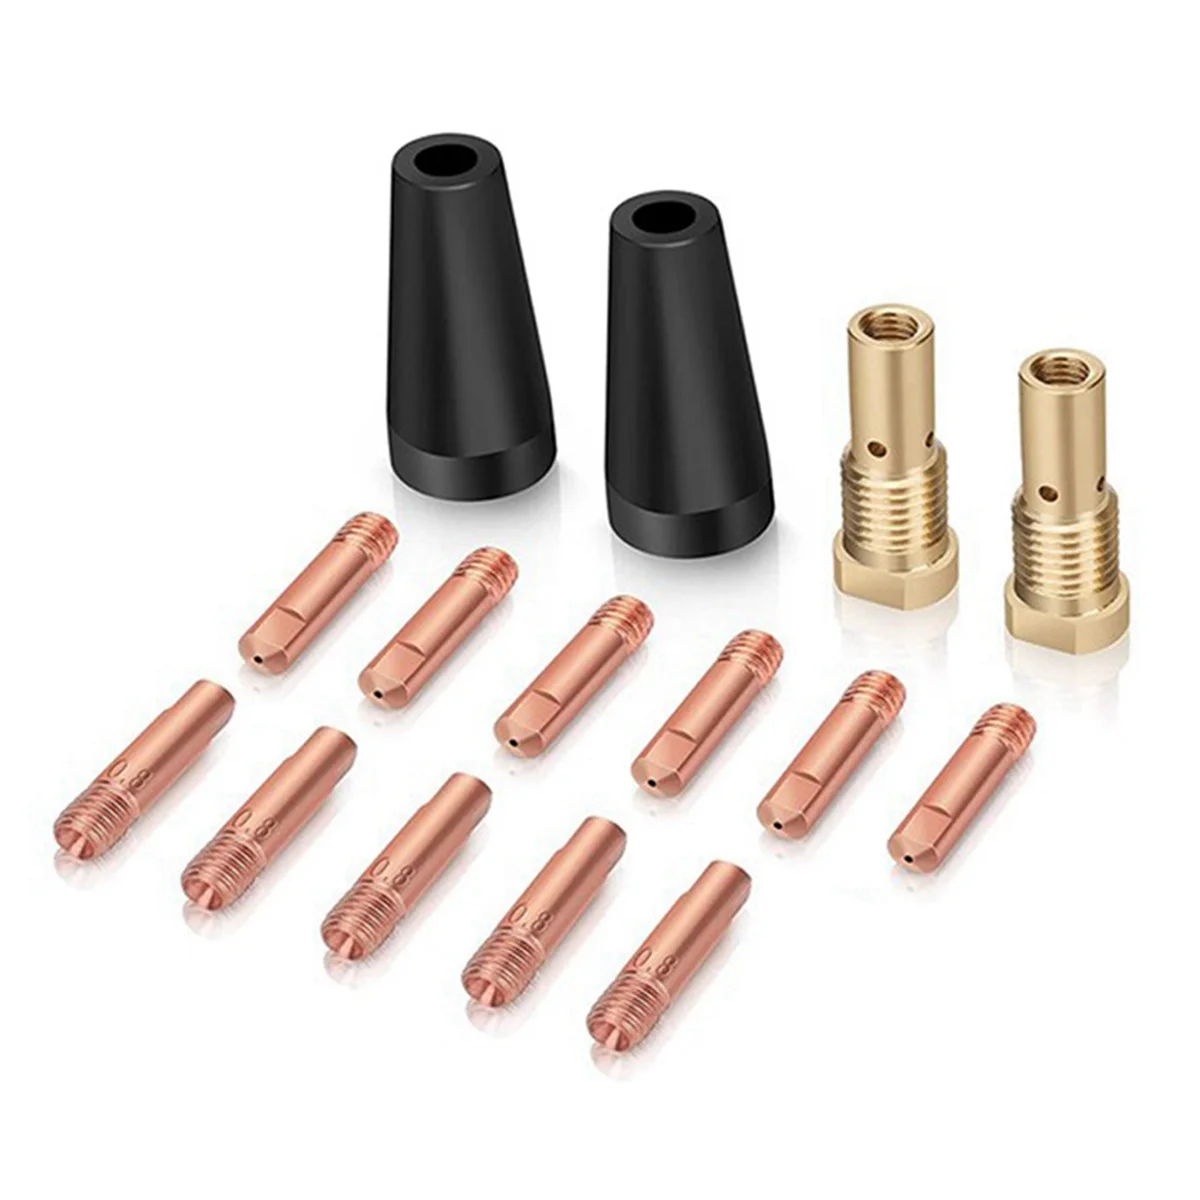 

15Pcs MIG Welding Kit Flux Core Gasless Nozzle 0.8mm Brass Welding Tips Replacement MIG Welder Accessories